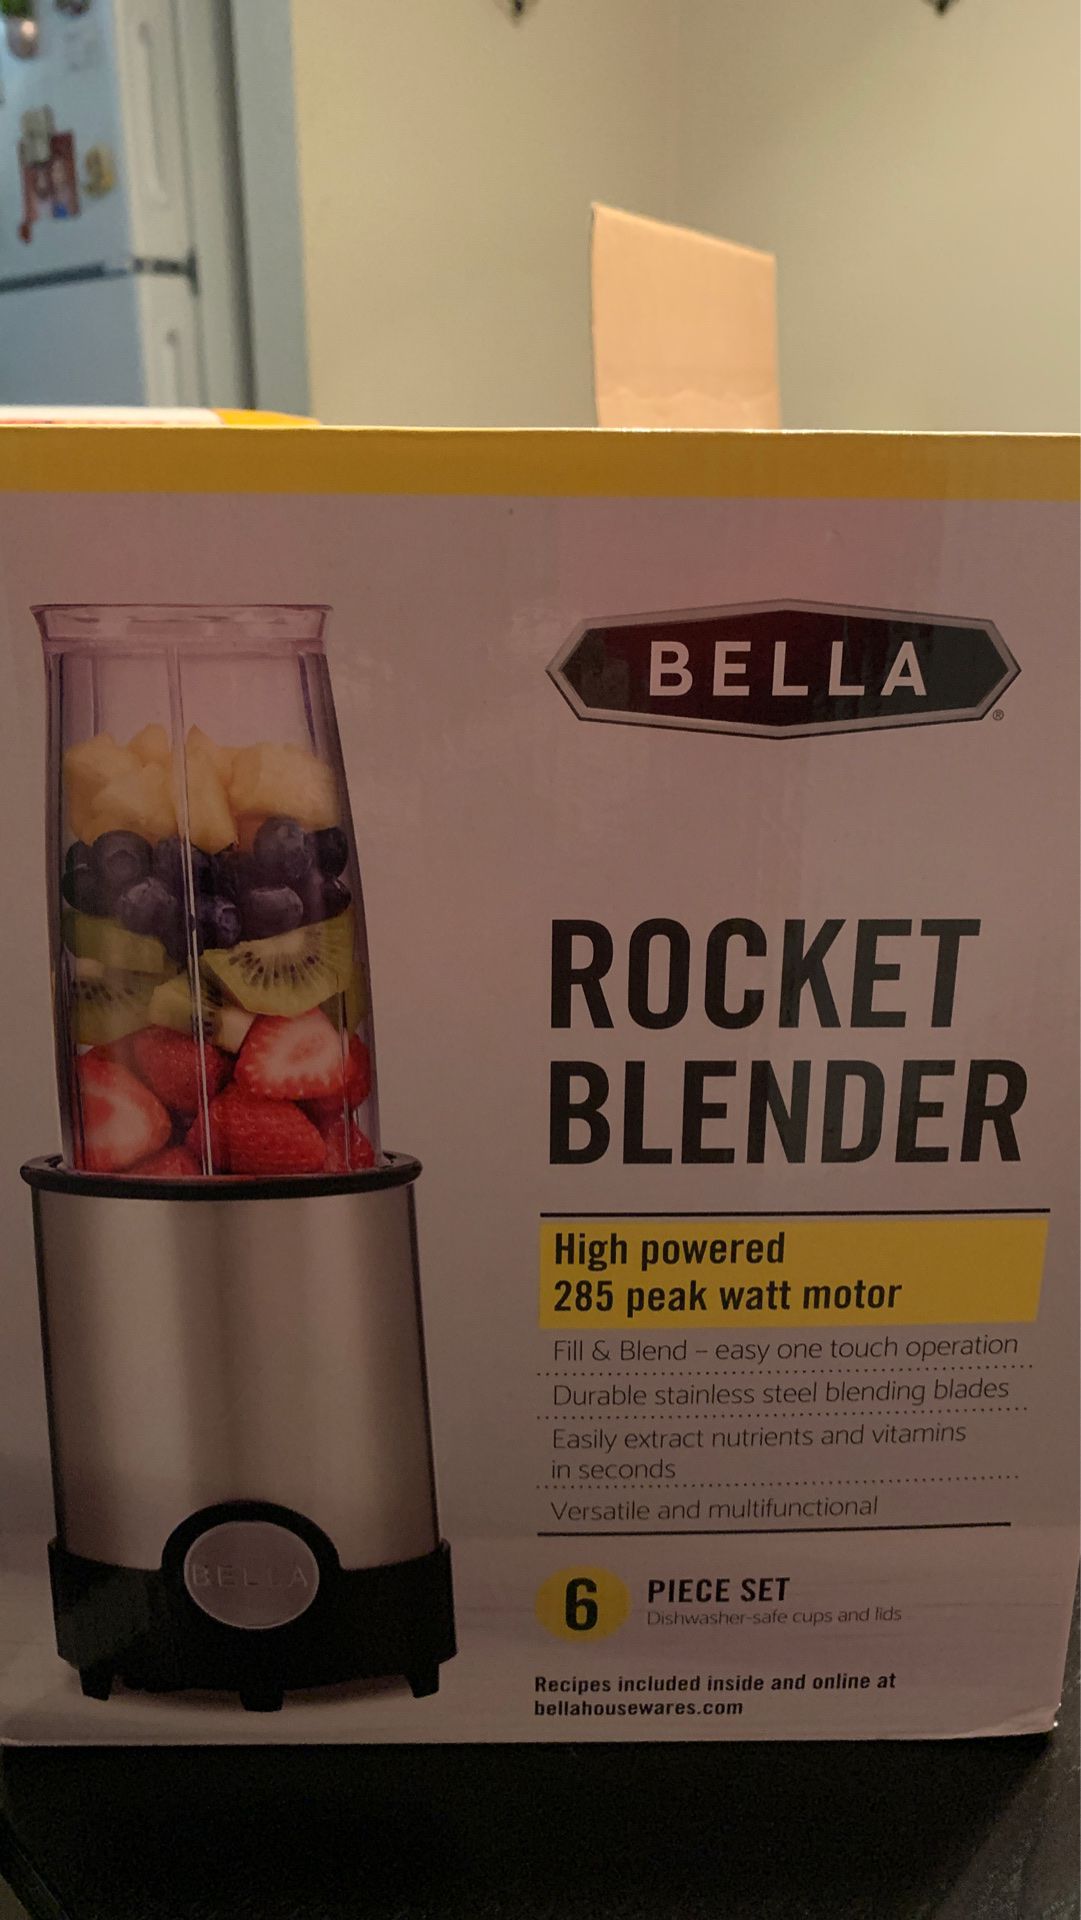 Brand new Bella rocket blender